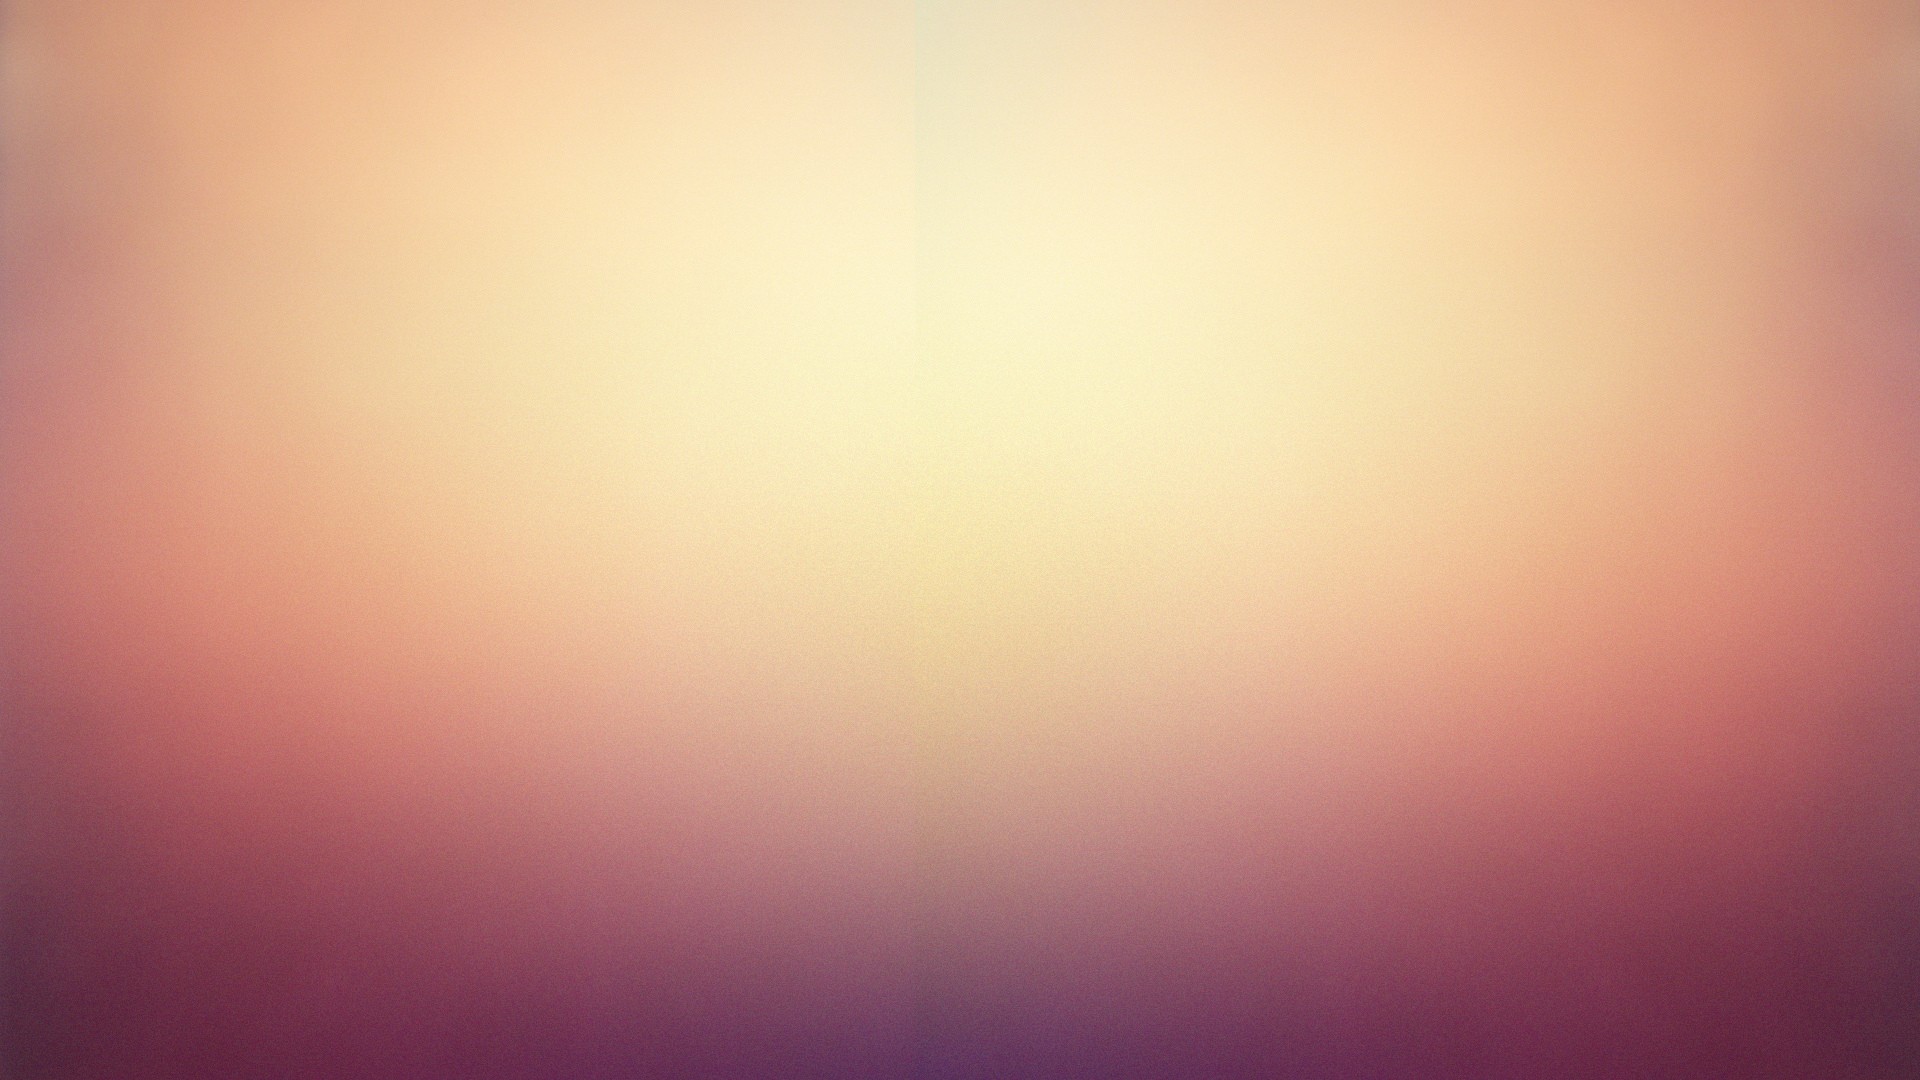 General 1920x1080 simple background gradient minimalism texture